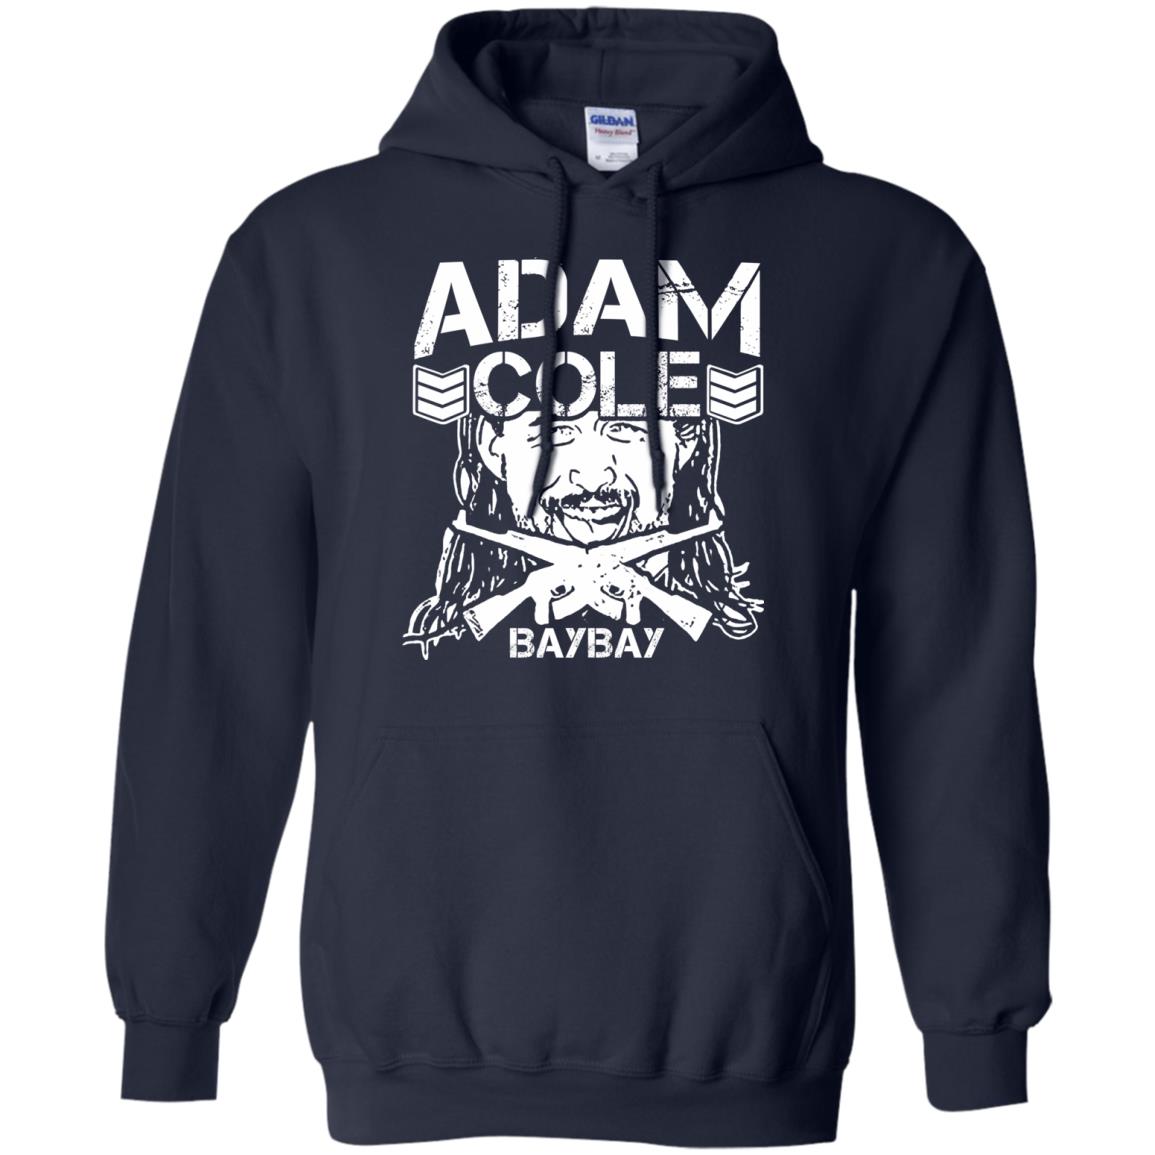 adam cole bay bay hoodie - navy blue